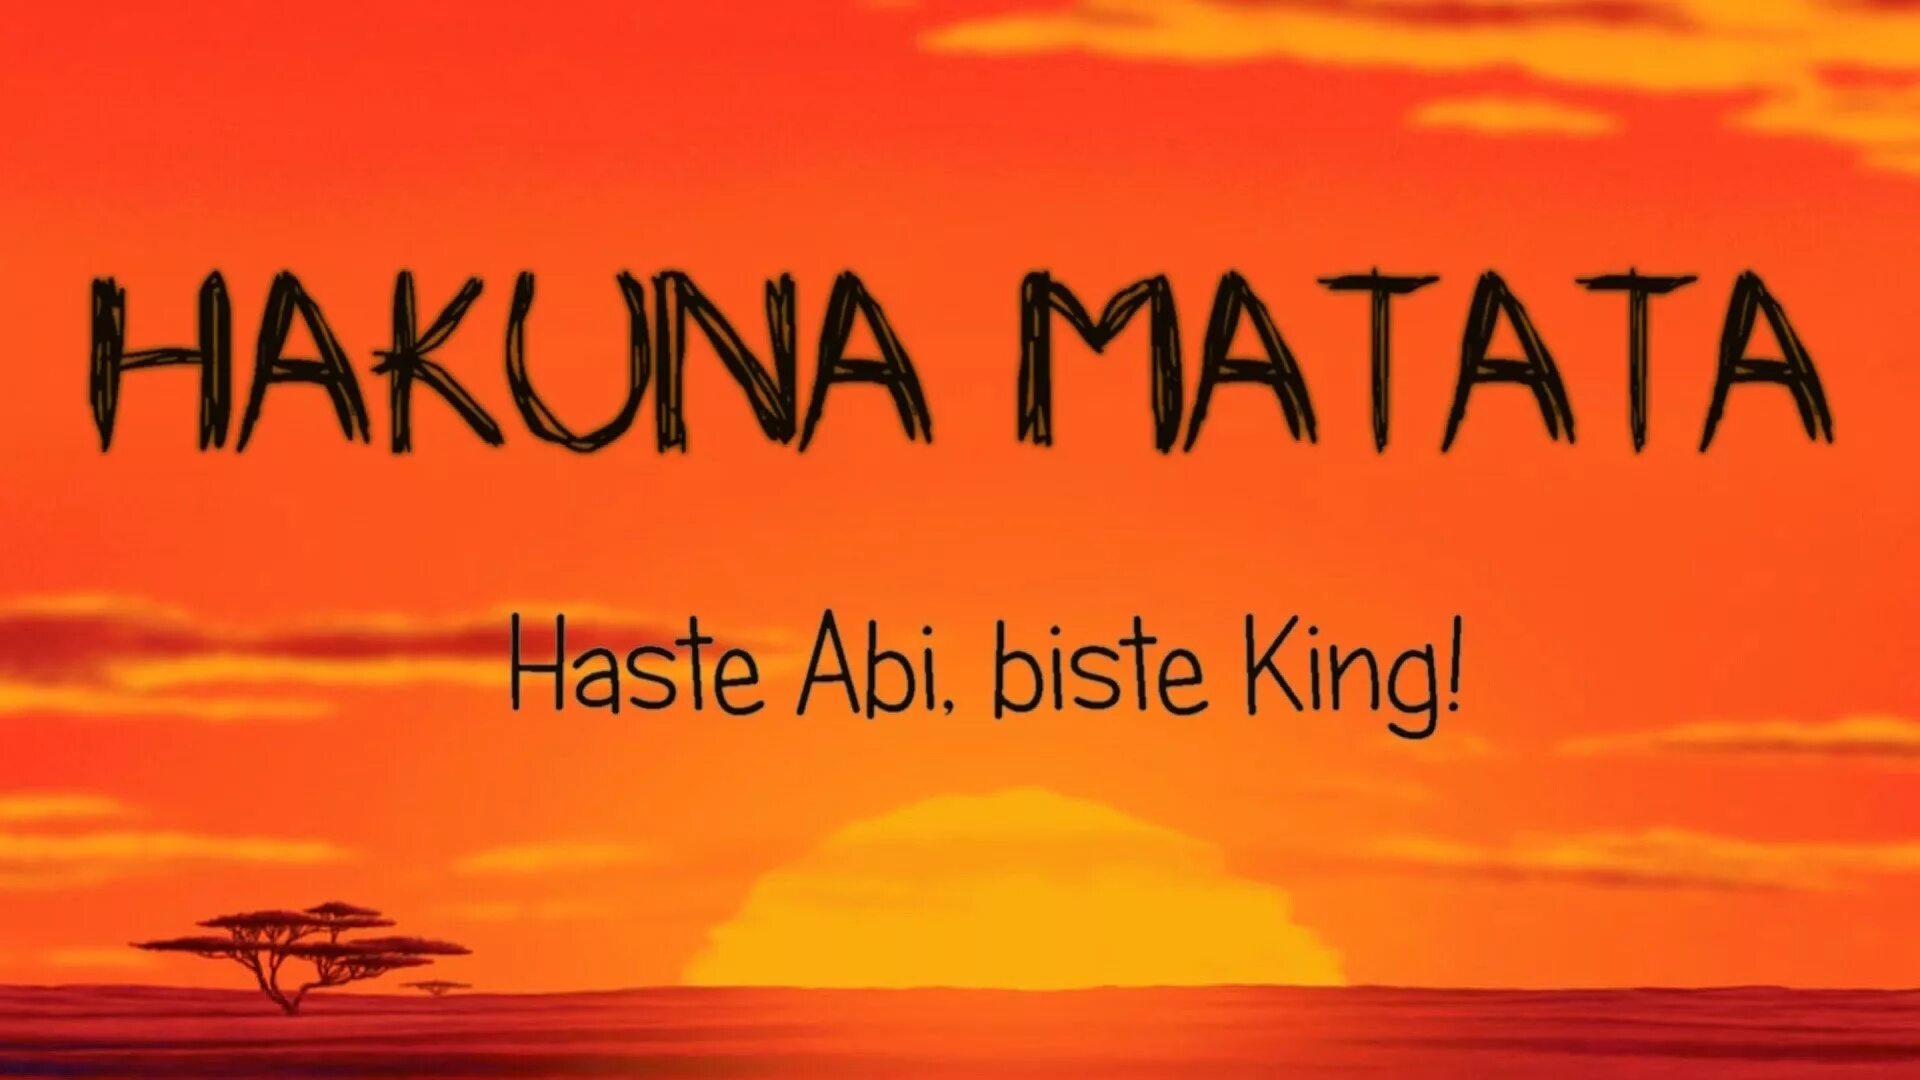 Как переводится акуна. Акуна Матата. Акуна Матата обои. Hakuna Matata надпись. Акуна Матата картинки.